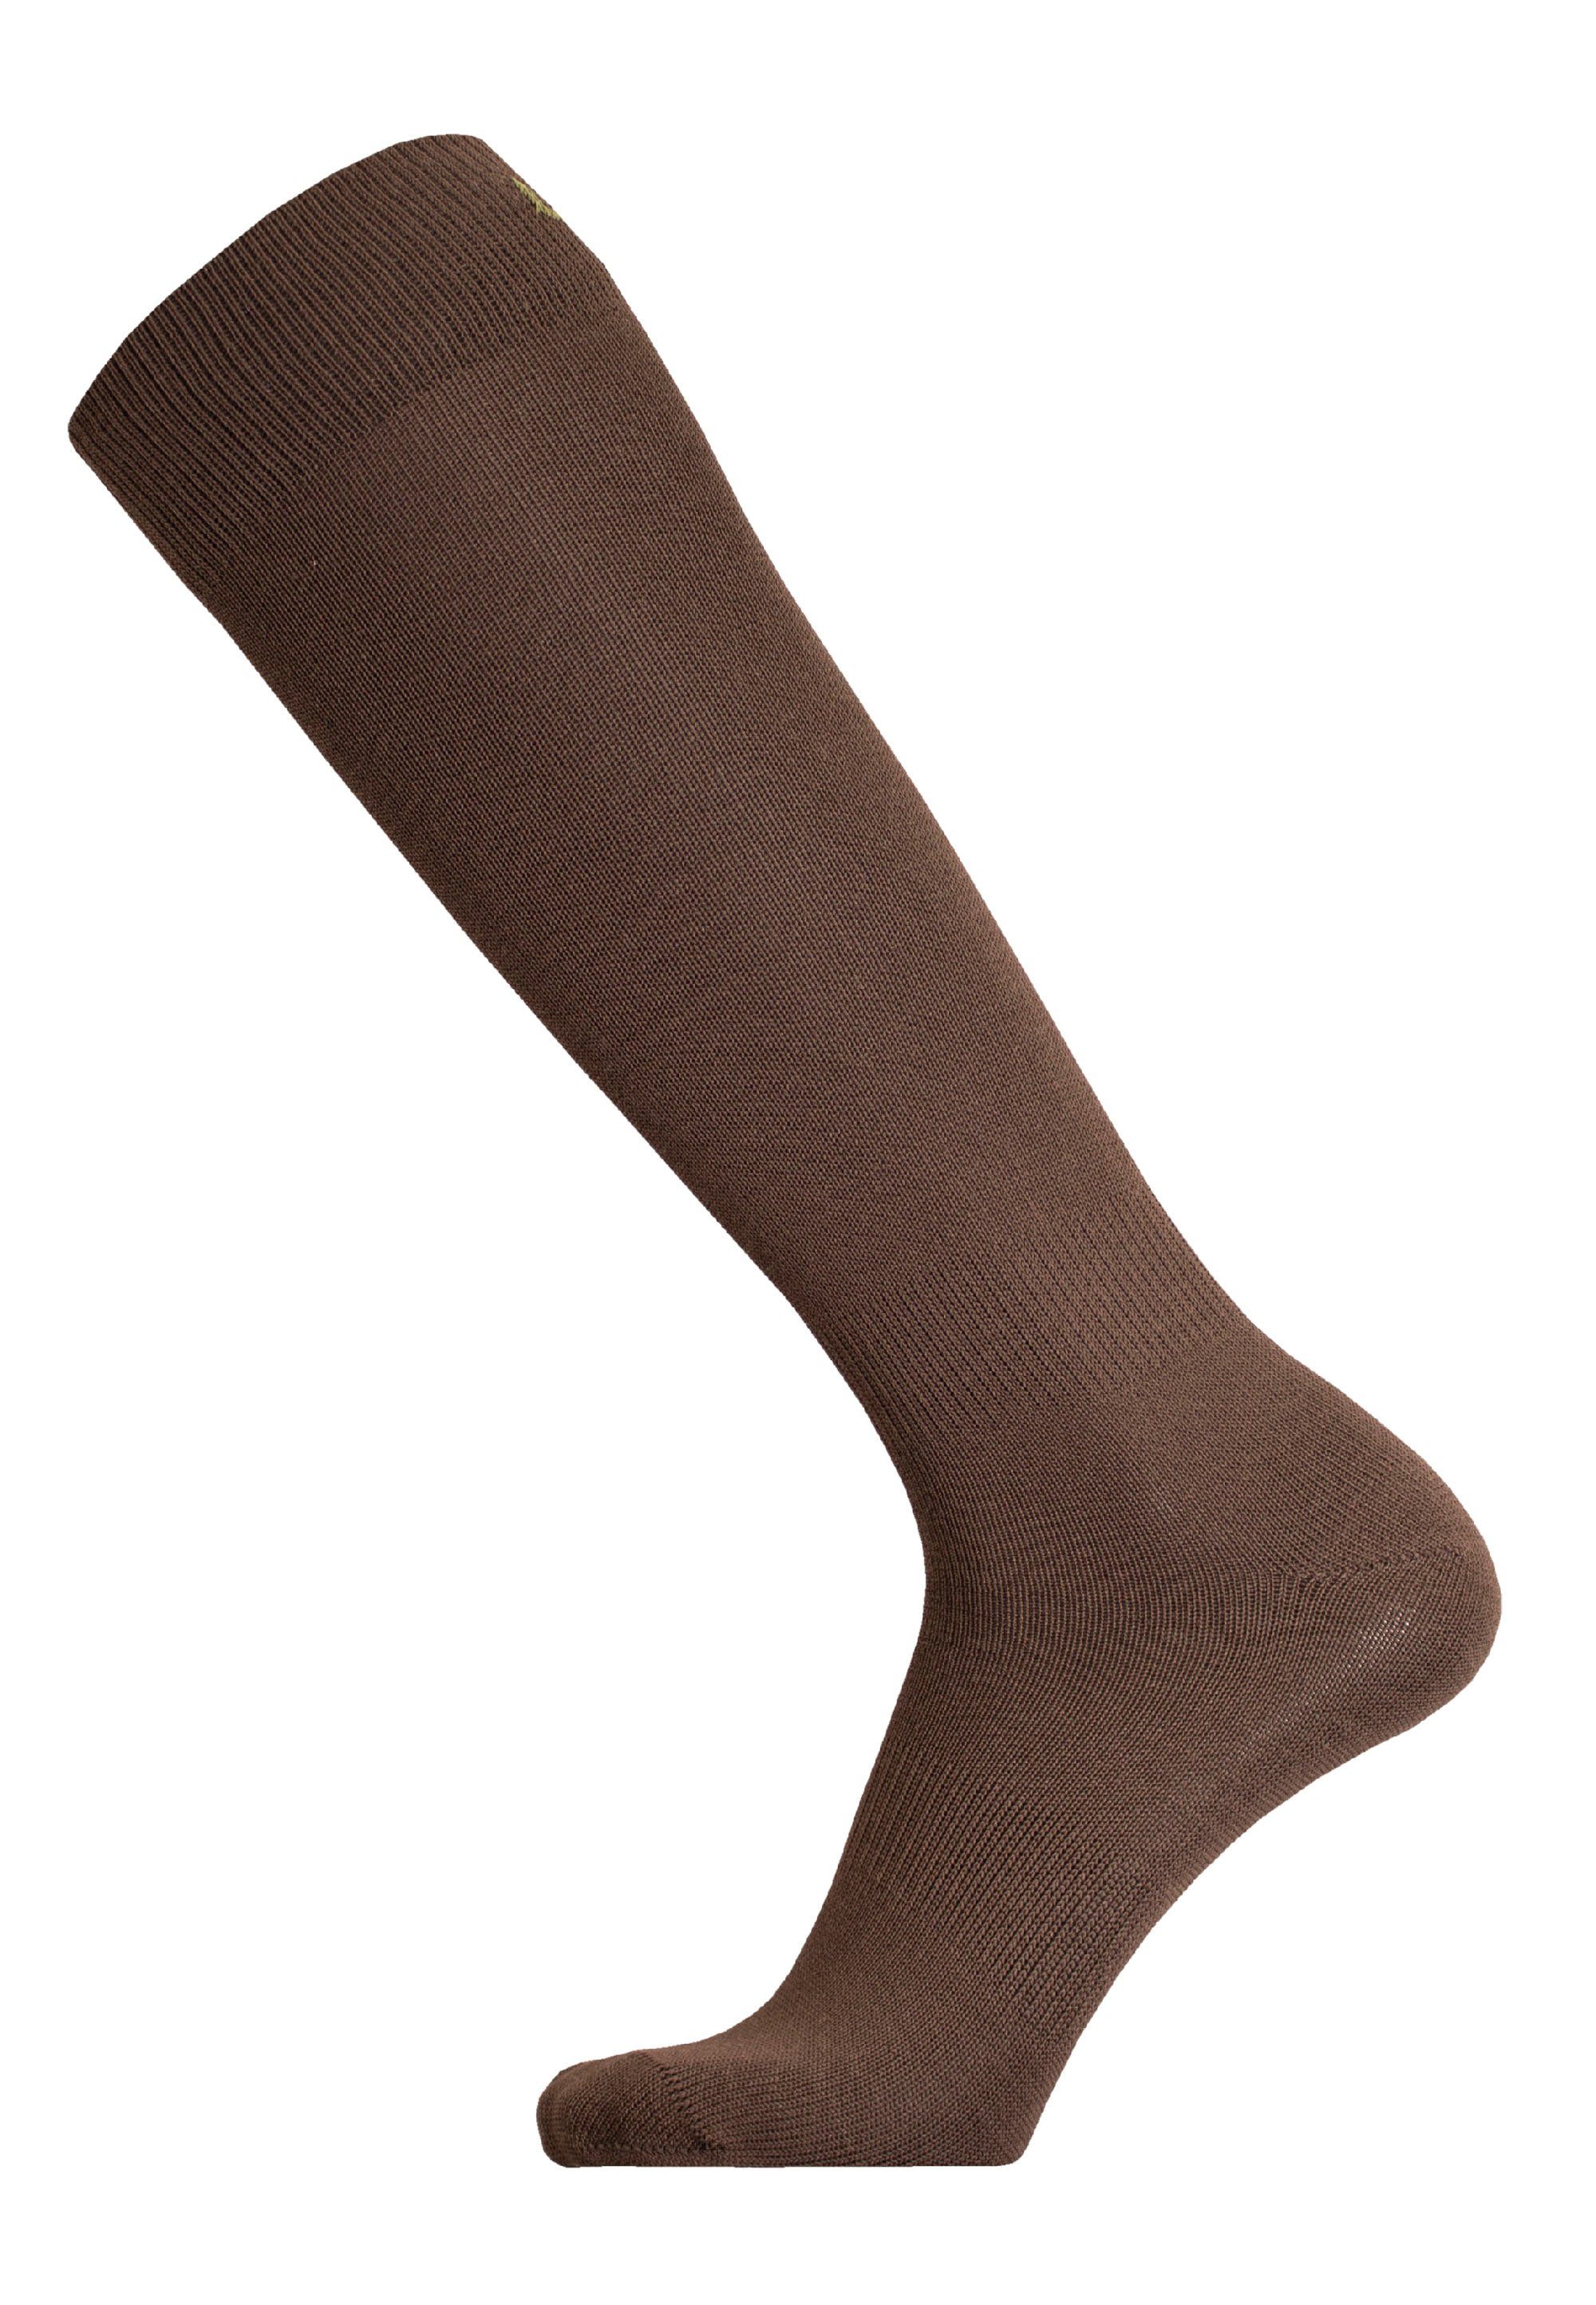 【Klassisch】 UphillSport Socken KAIHU (1-Paar) Verarbeitung hochwertiger qualitativ in braun